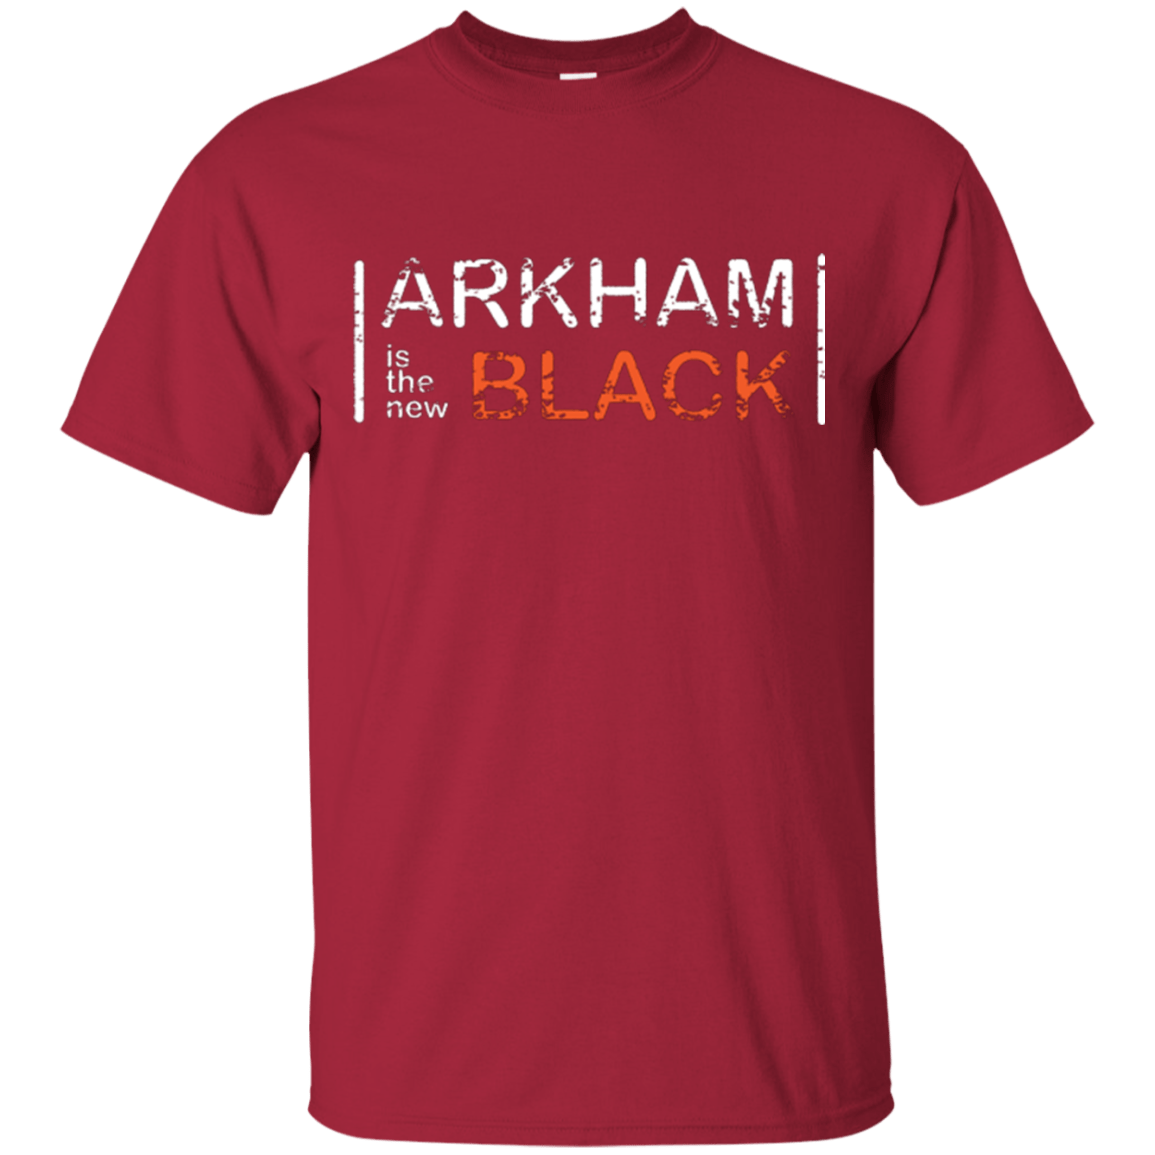 T-Shirts Cardinal / Small Arkham Black T-Shirt